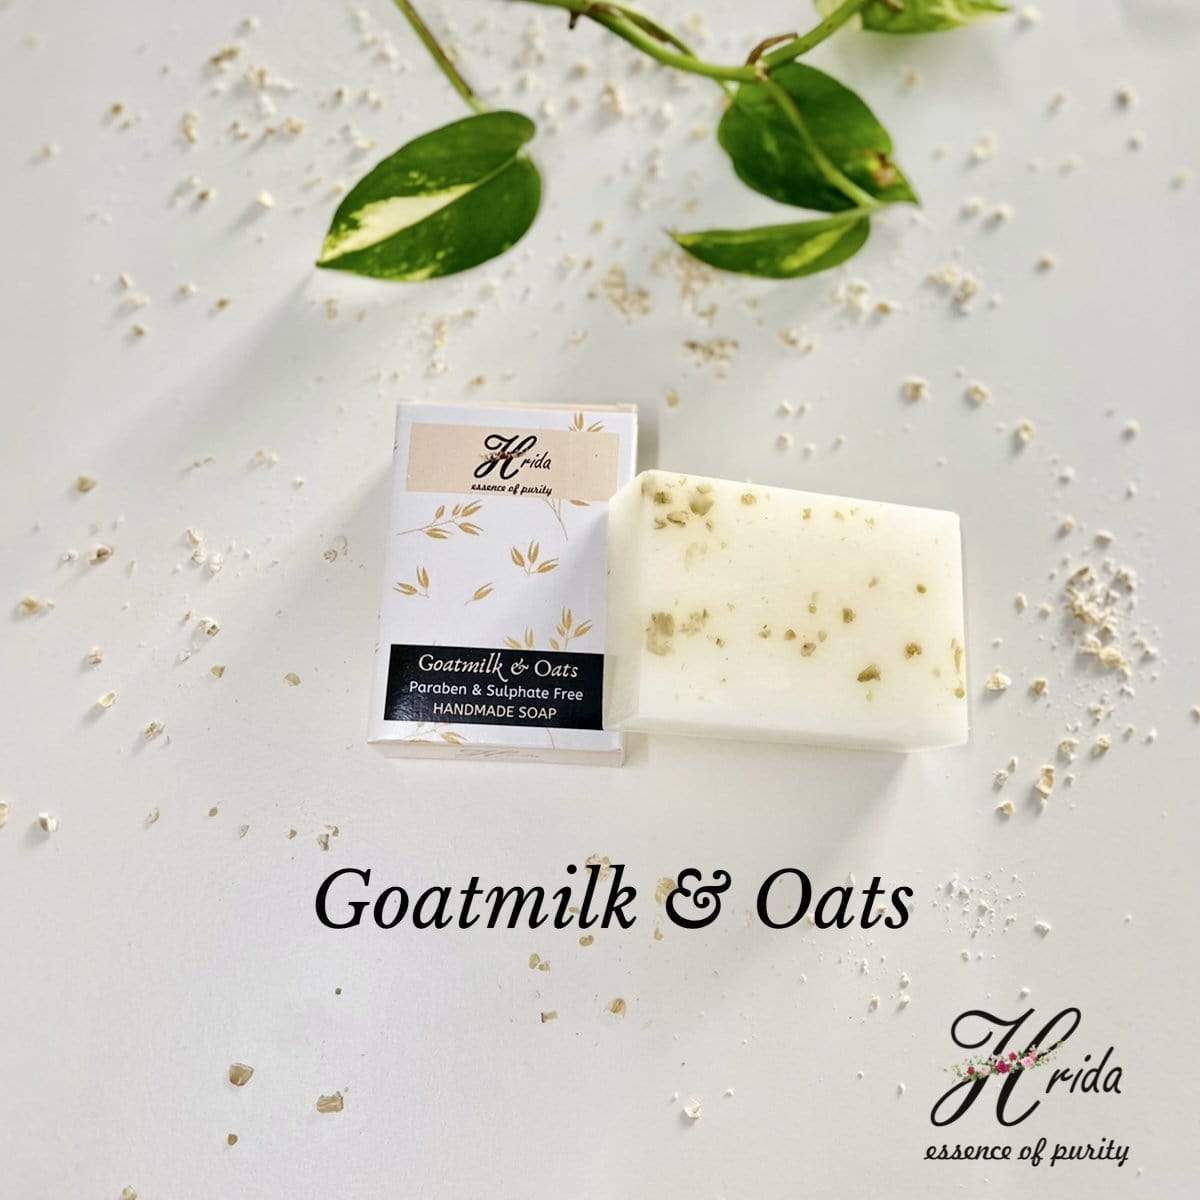 Hrida Goat Milk & Oats Handmade Soap - hfnl!fe